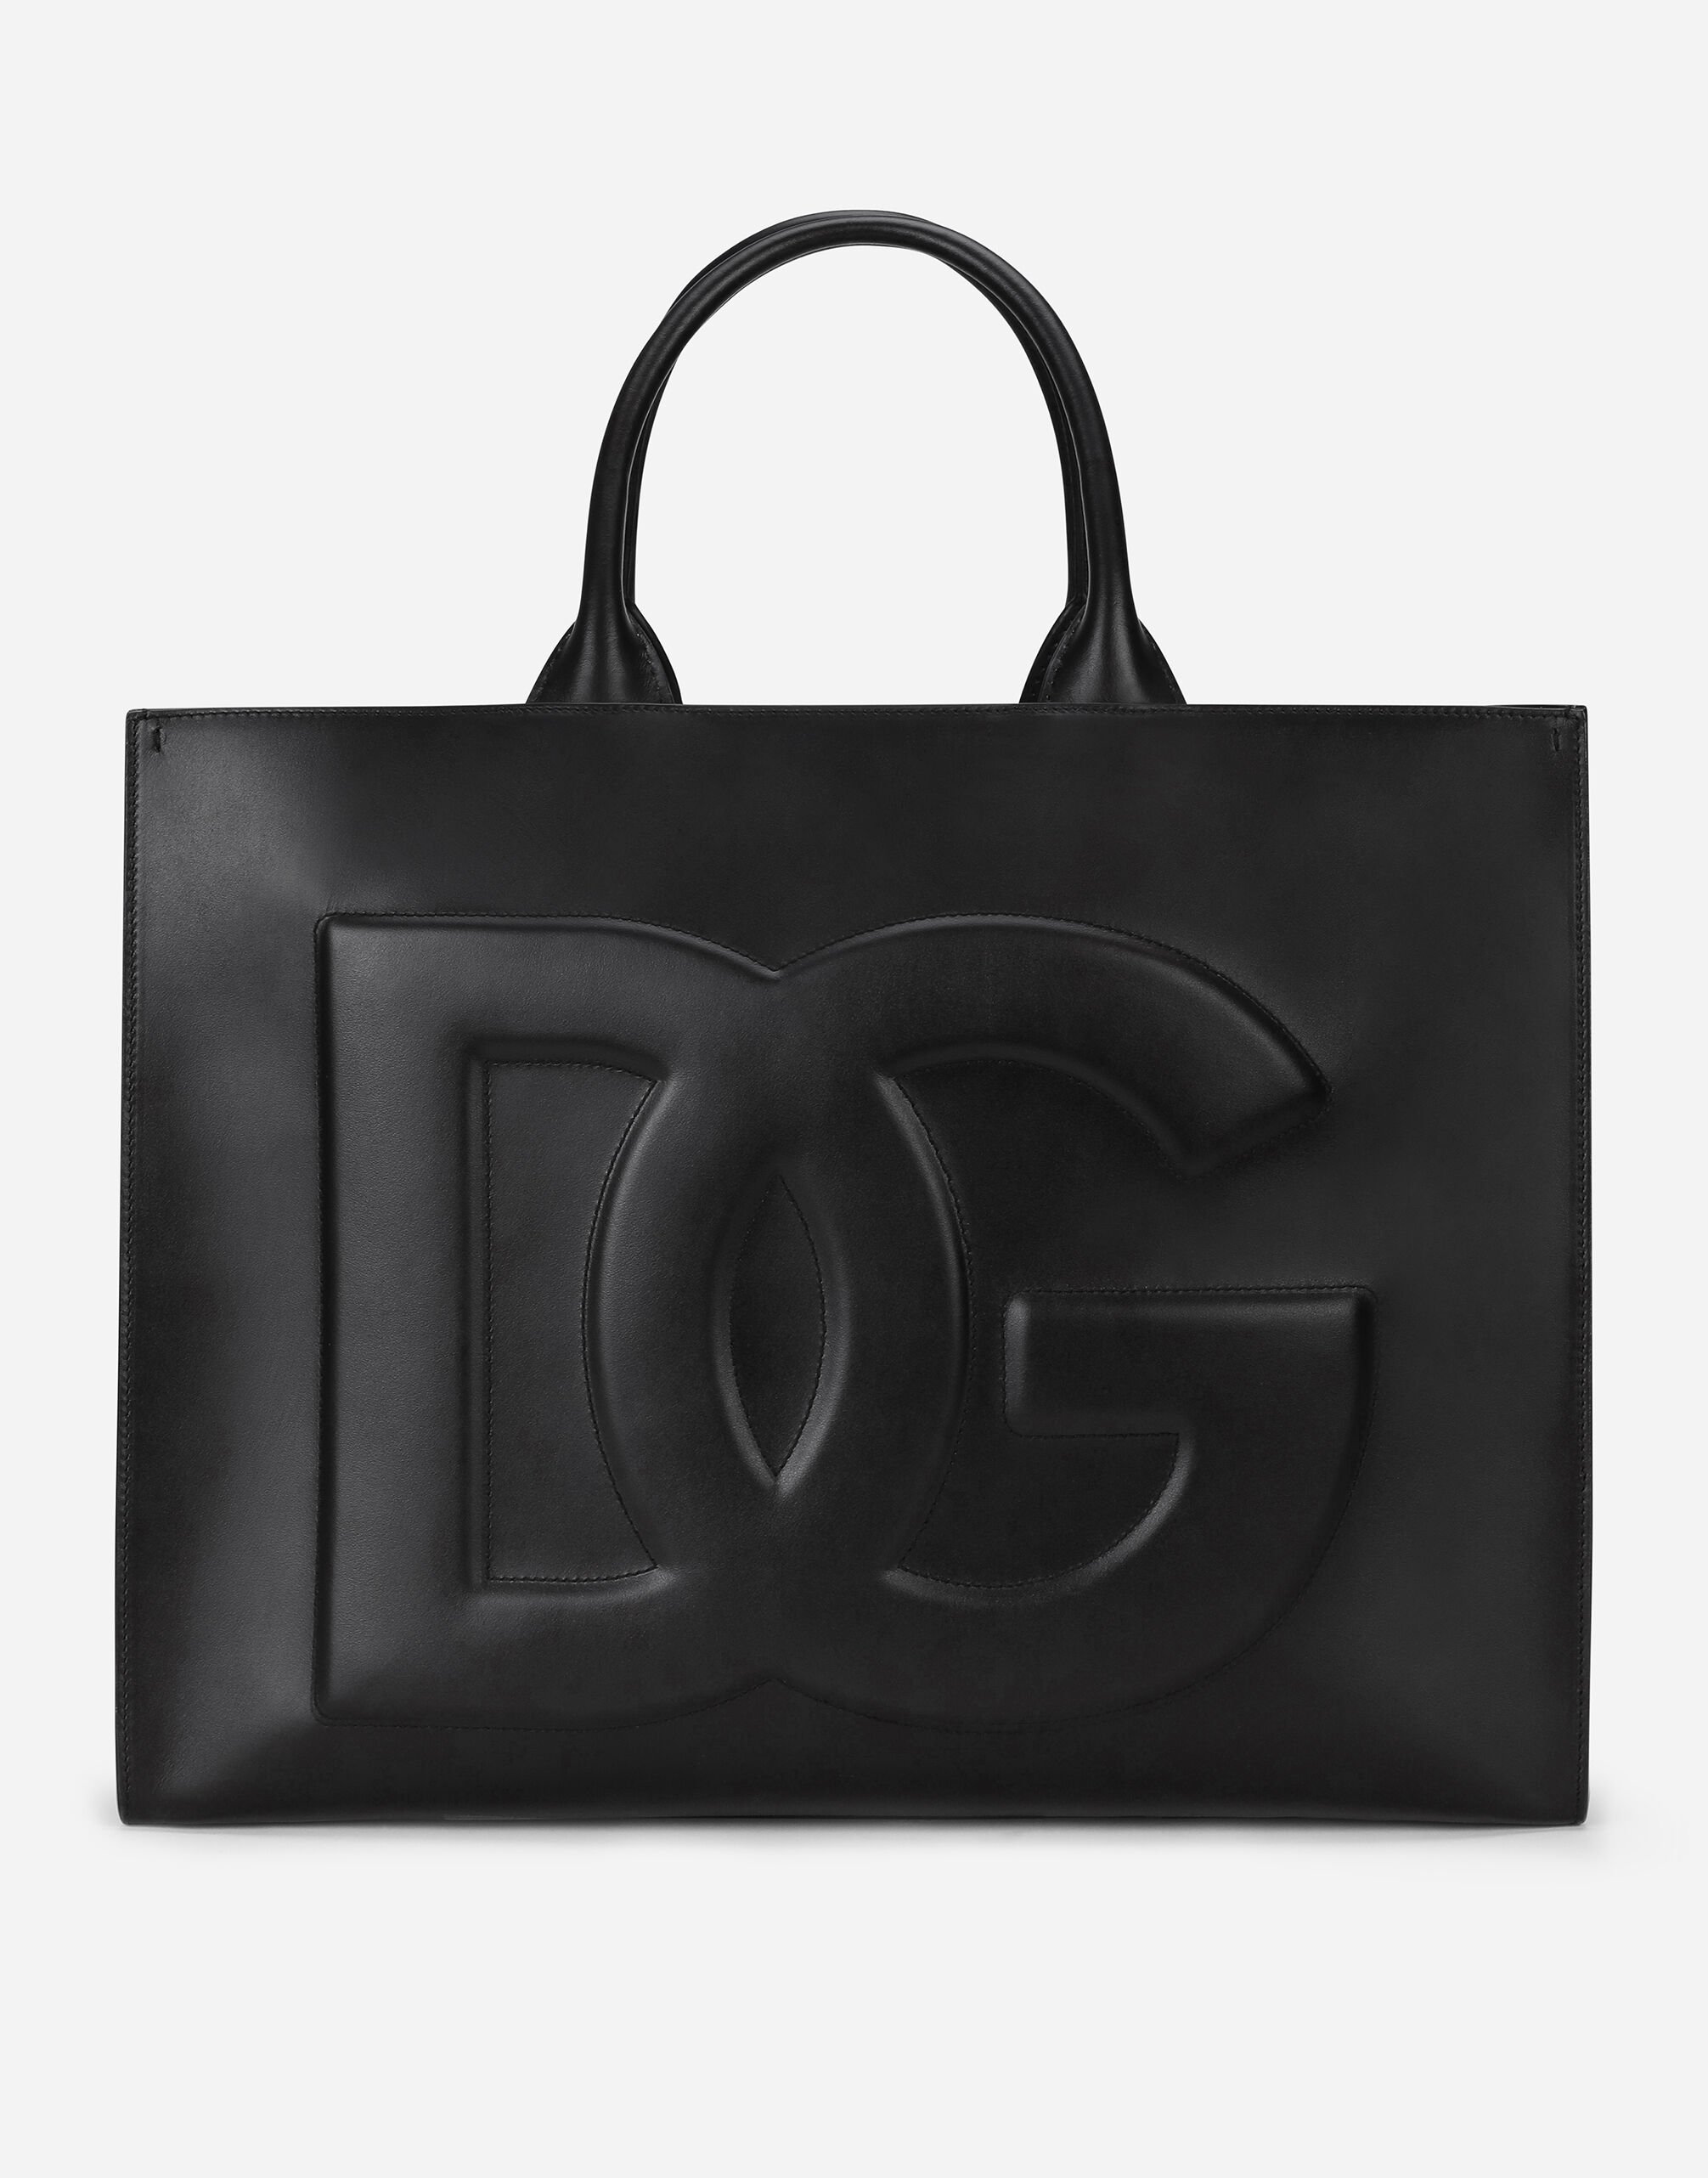 Dolce & Gabbana 카프스킨 DG 라지 데일리 쇼퍼백 핑크 BB2179AW752